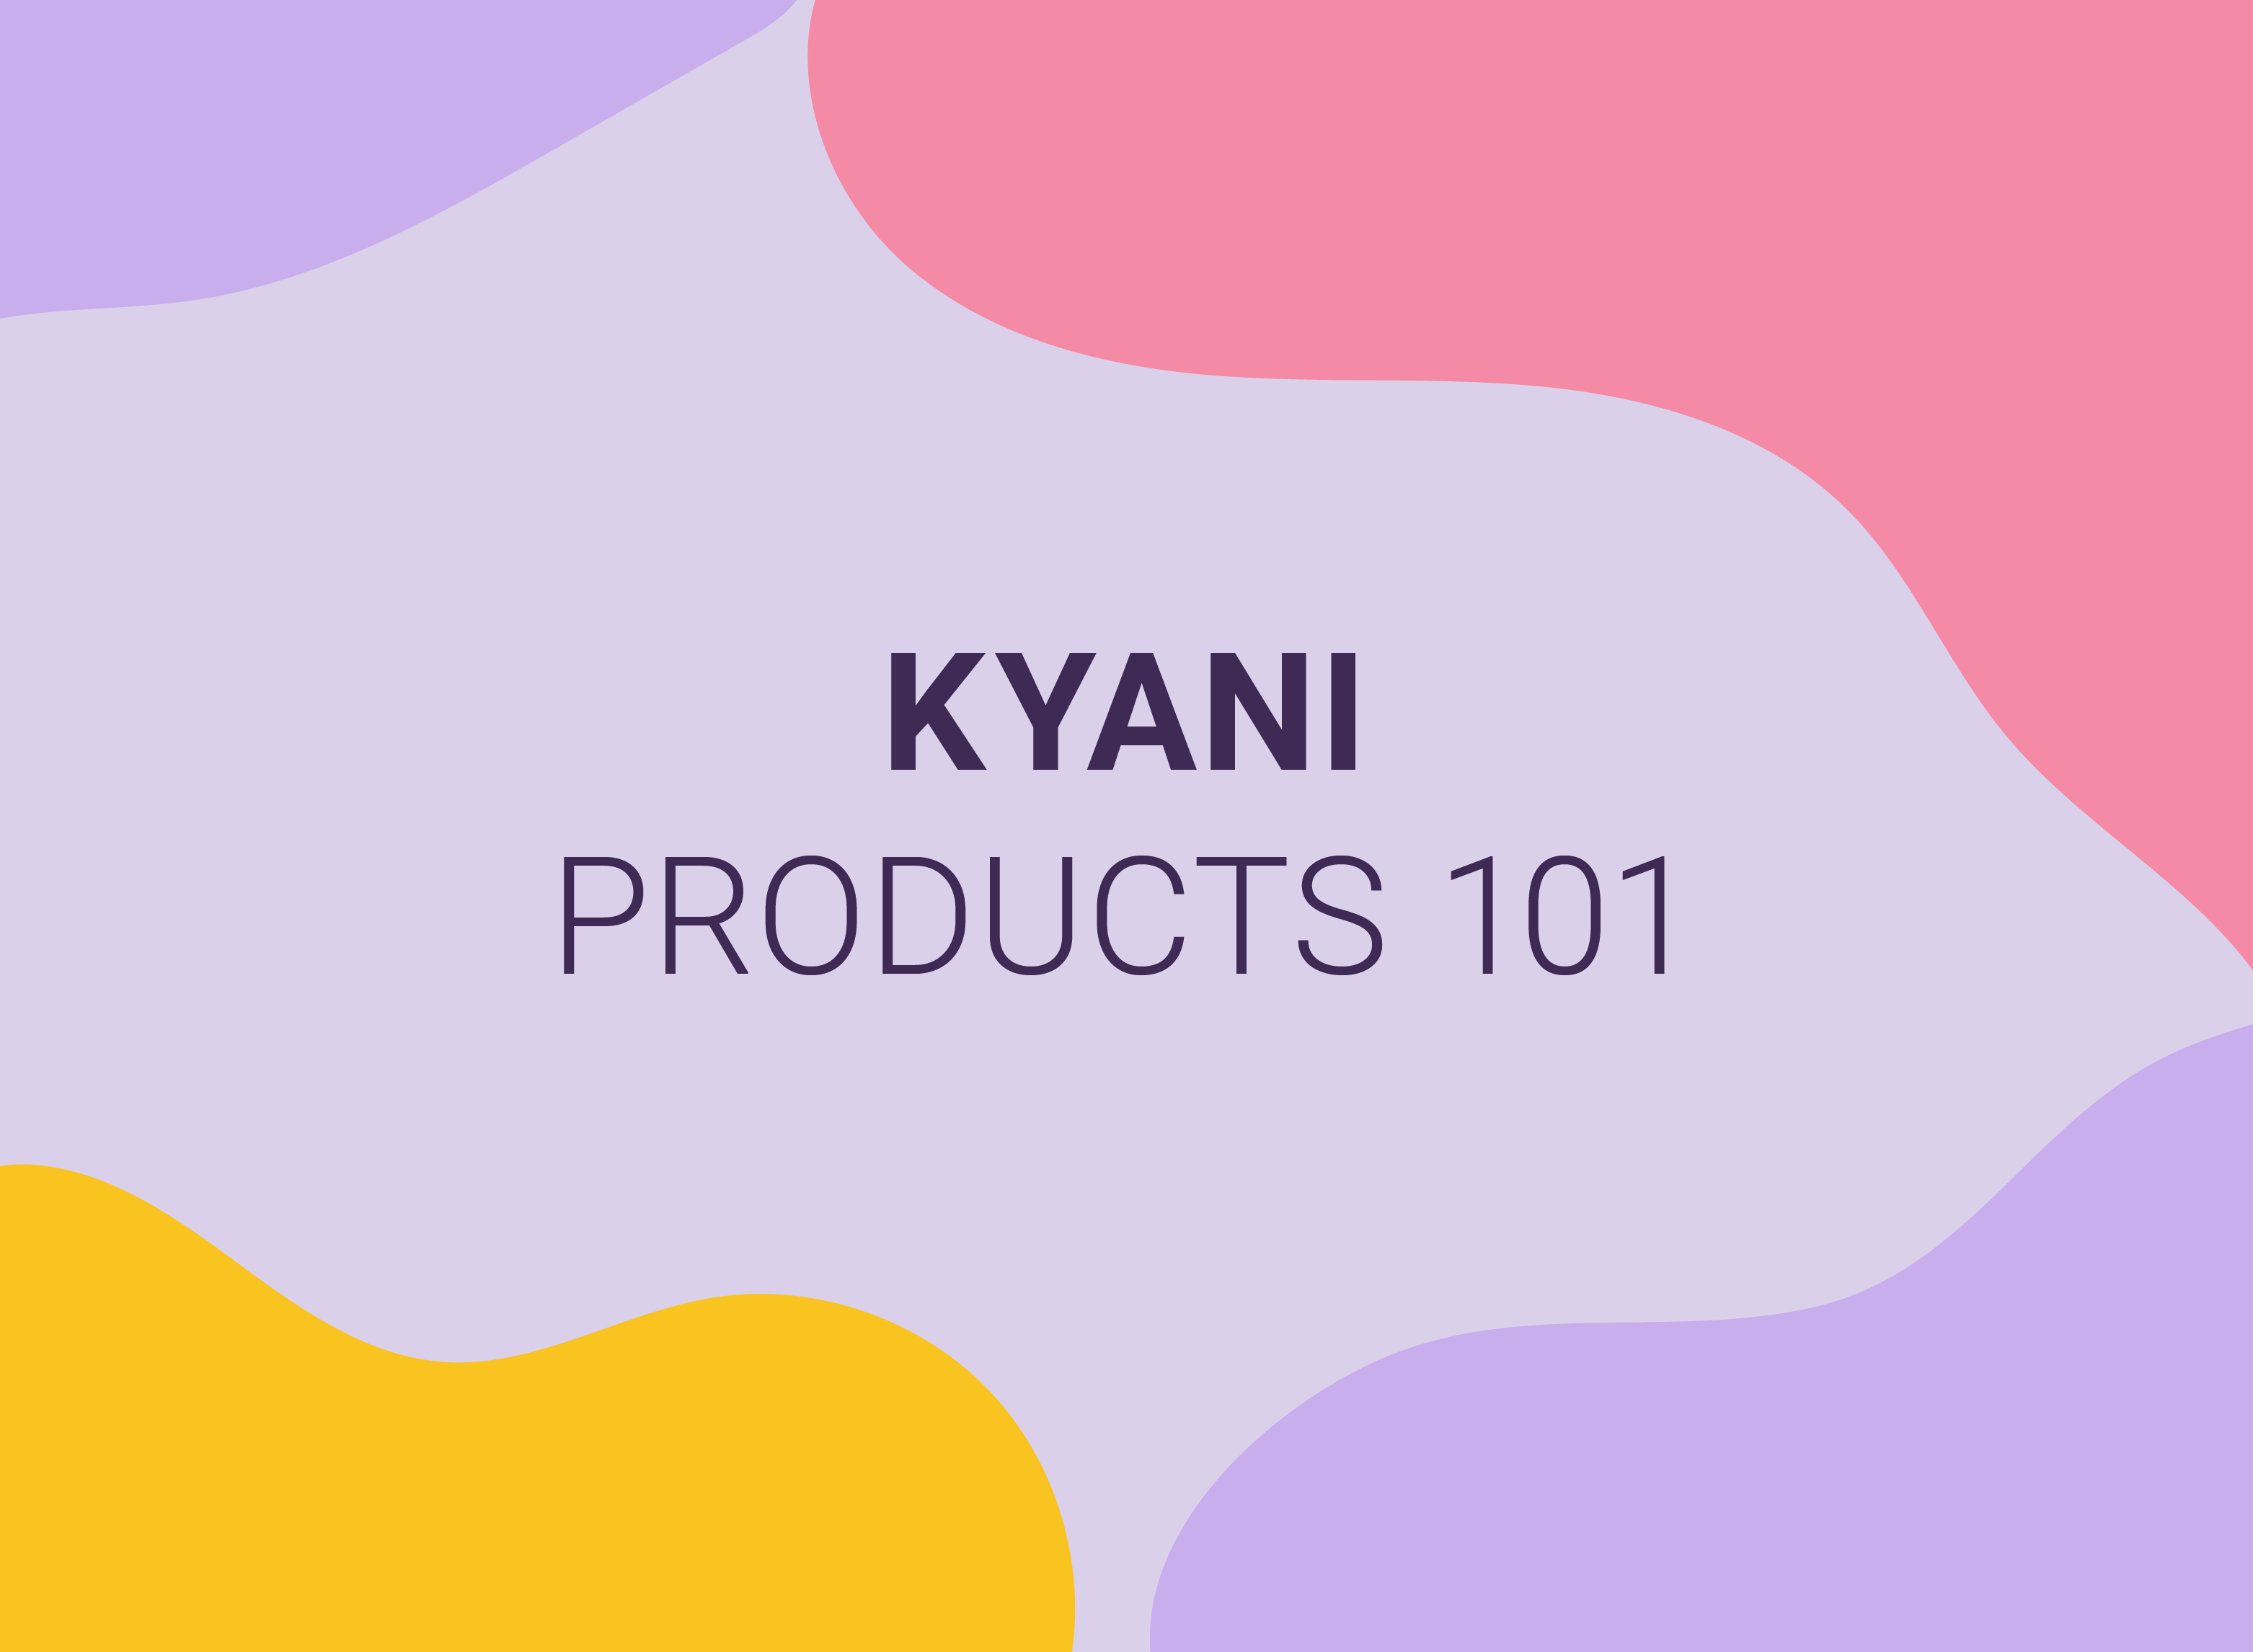 Kyani Products 101